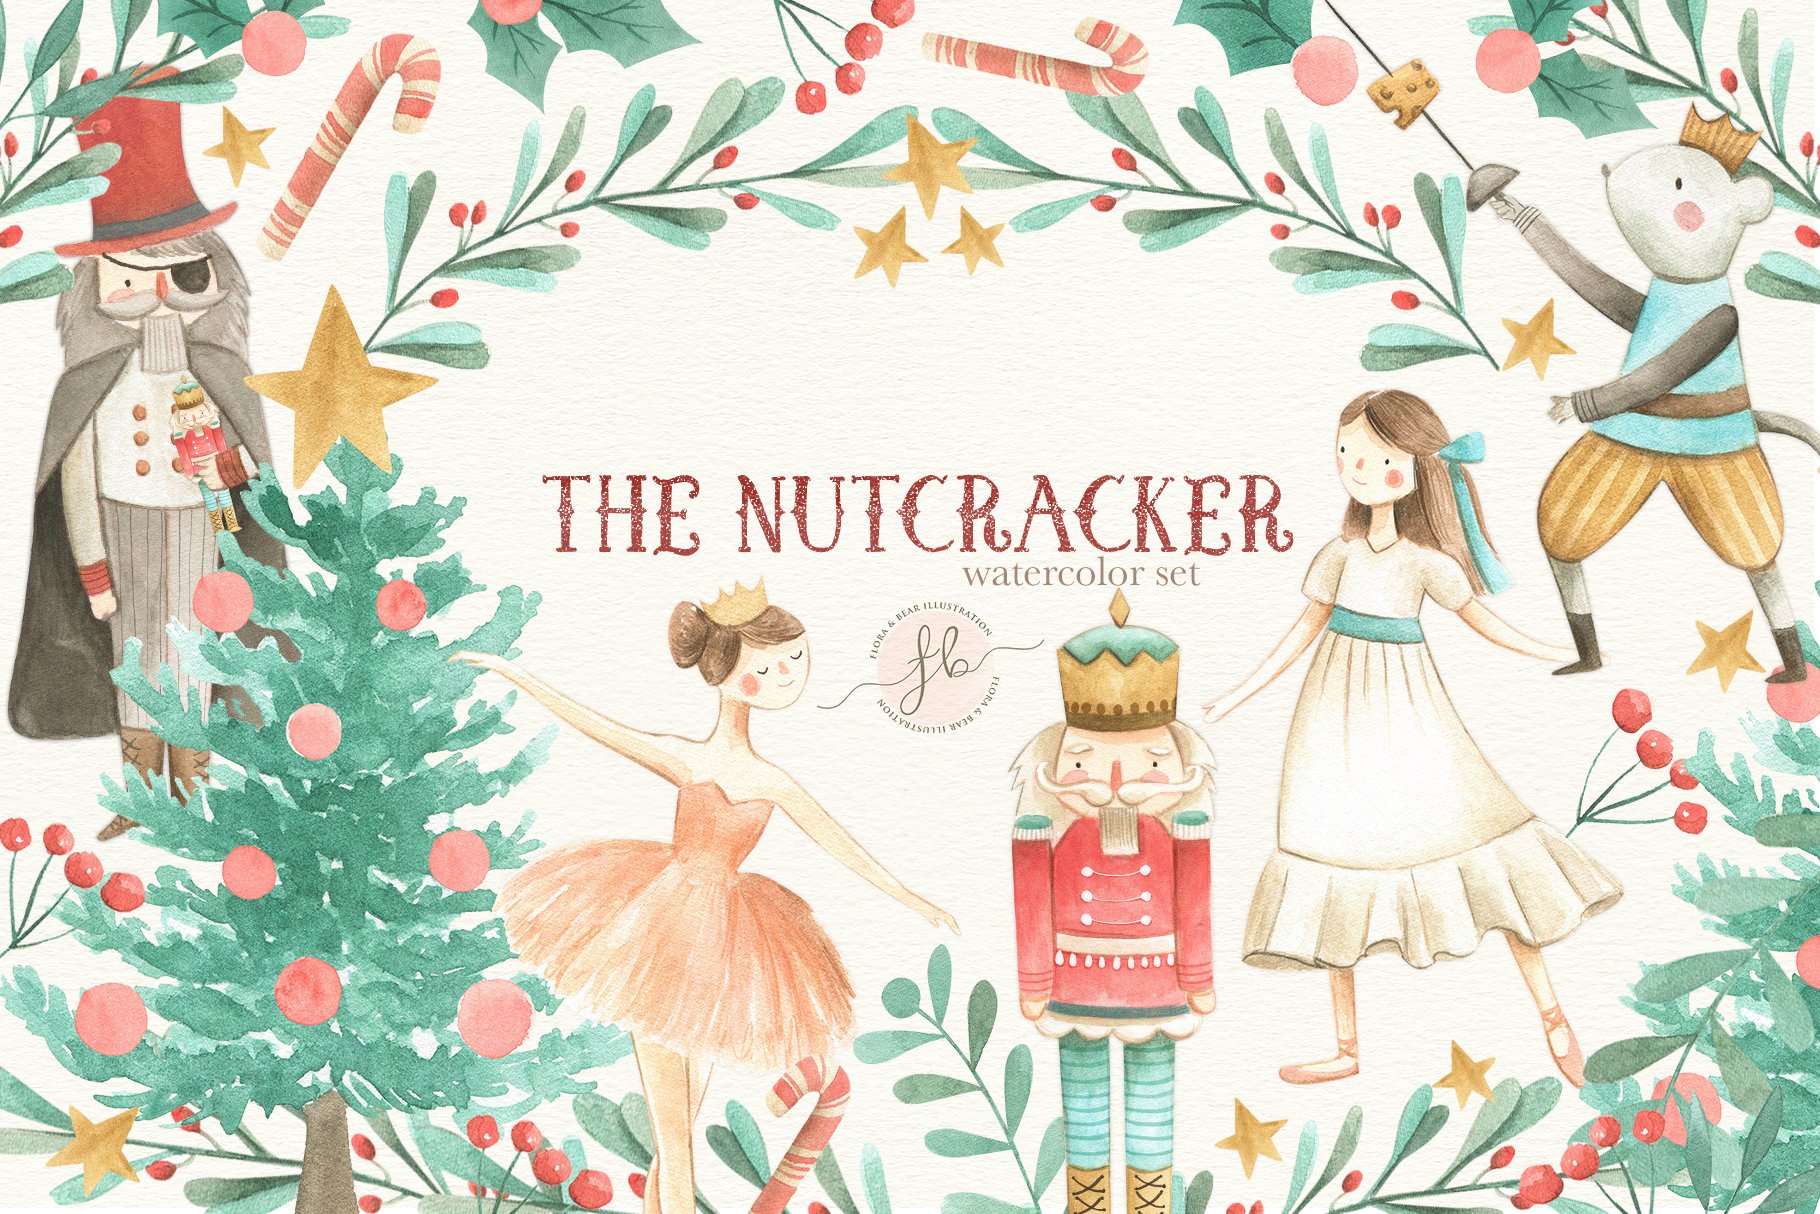 The Nutcracker cover image.